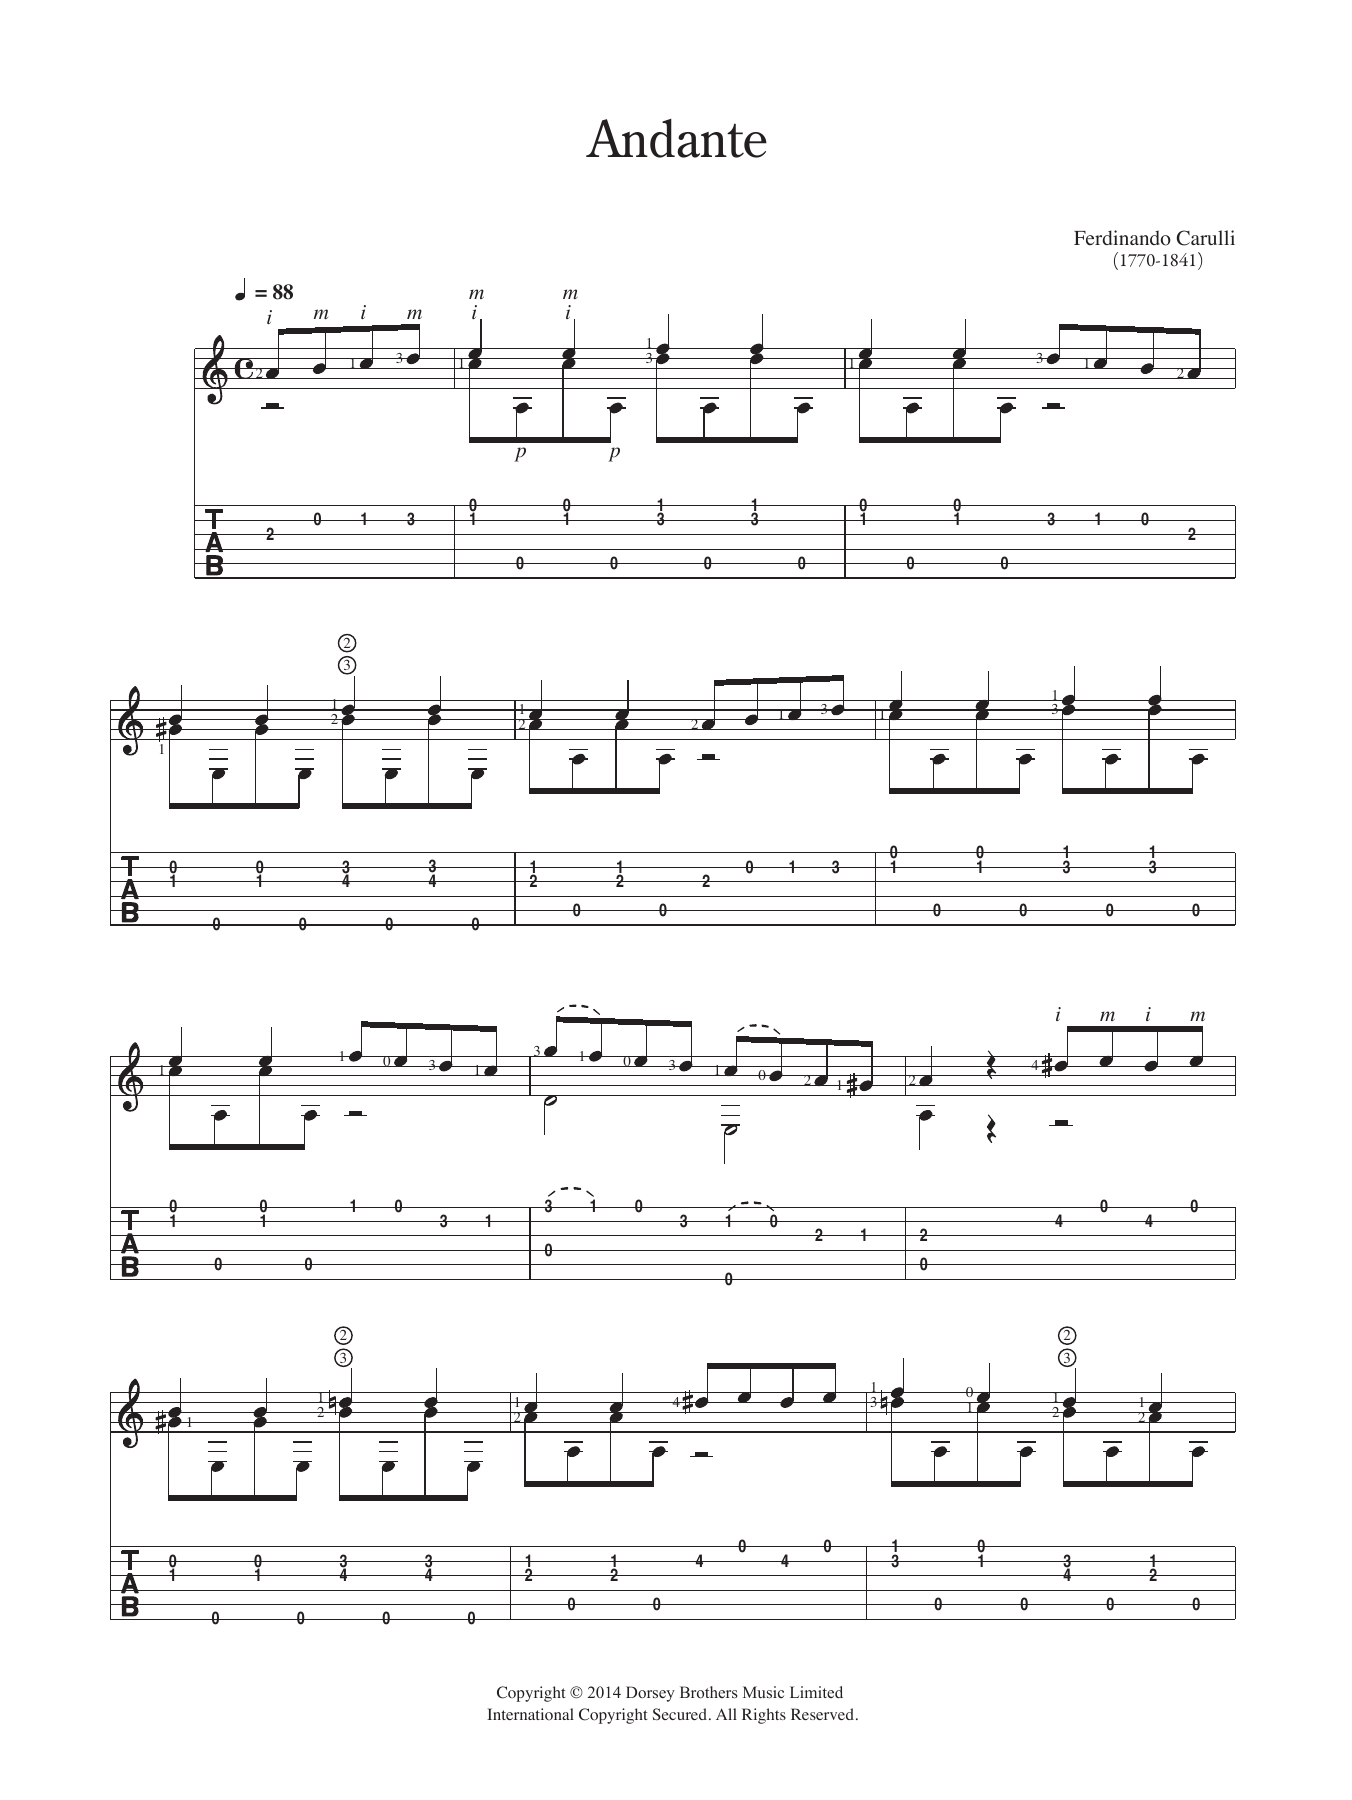 Ferdinando Carulli Andante sheet music notes and chords arranged for Easy Guitar